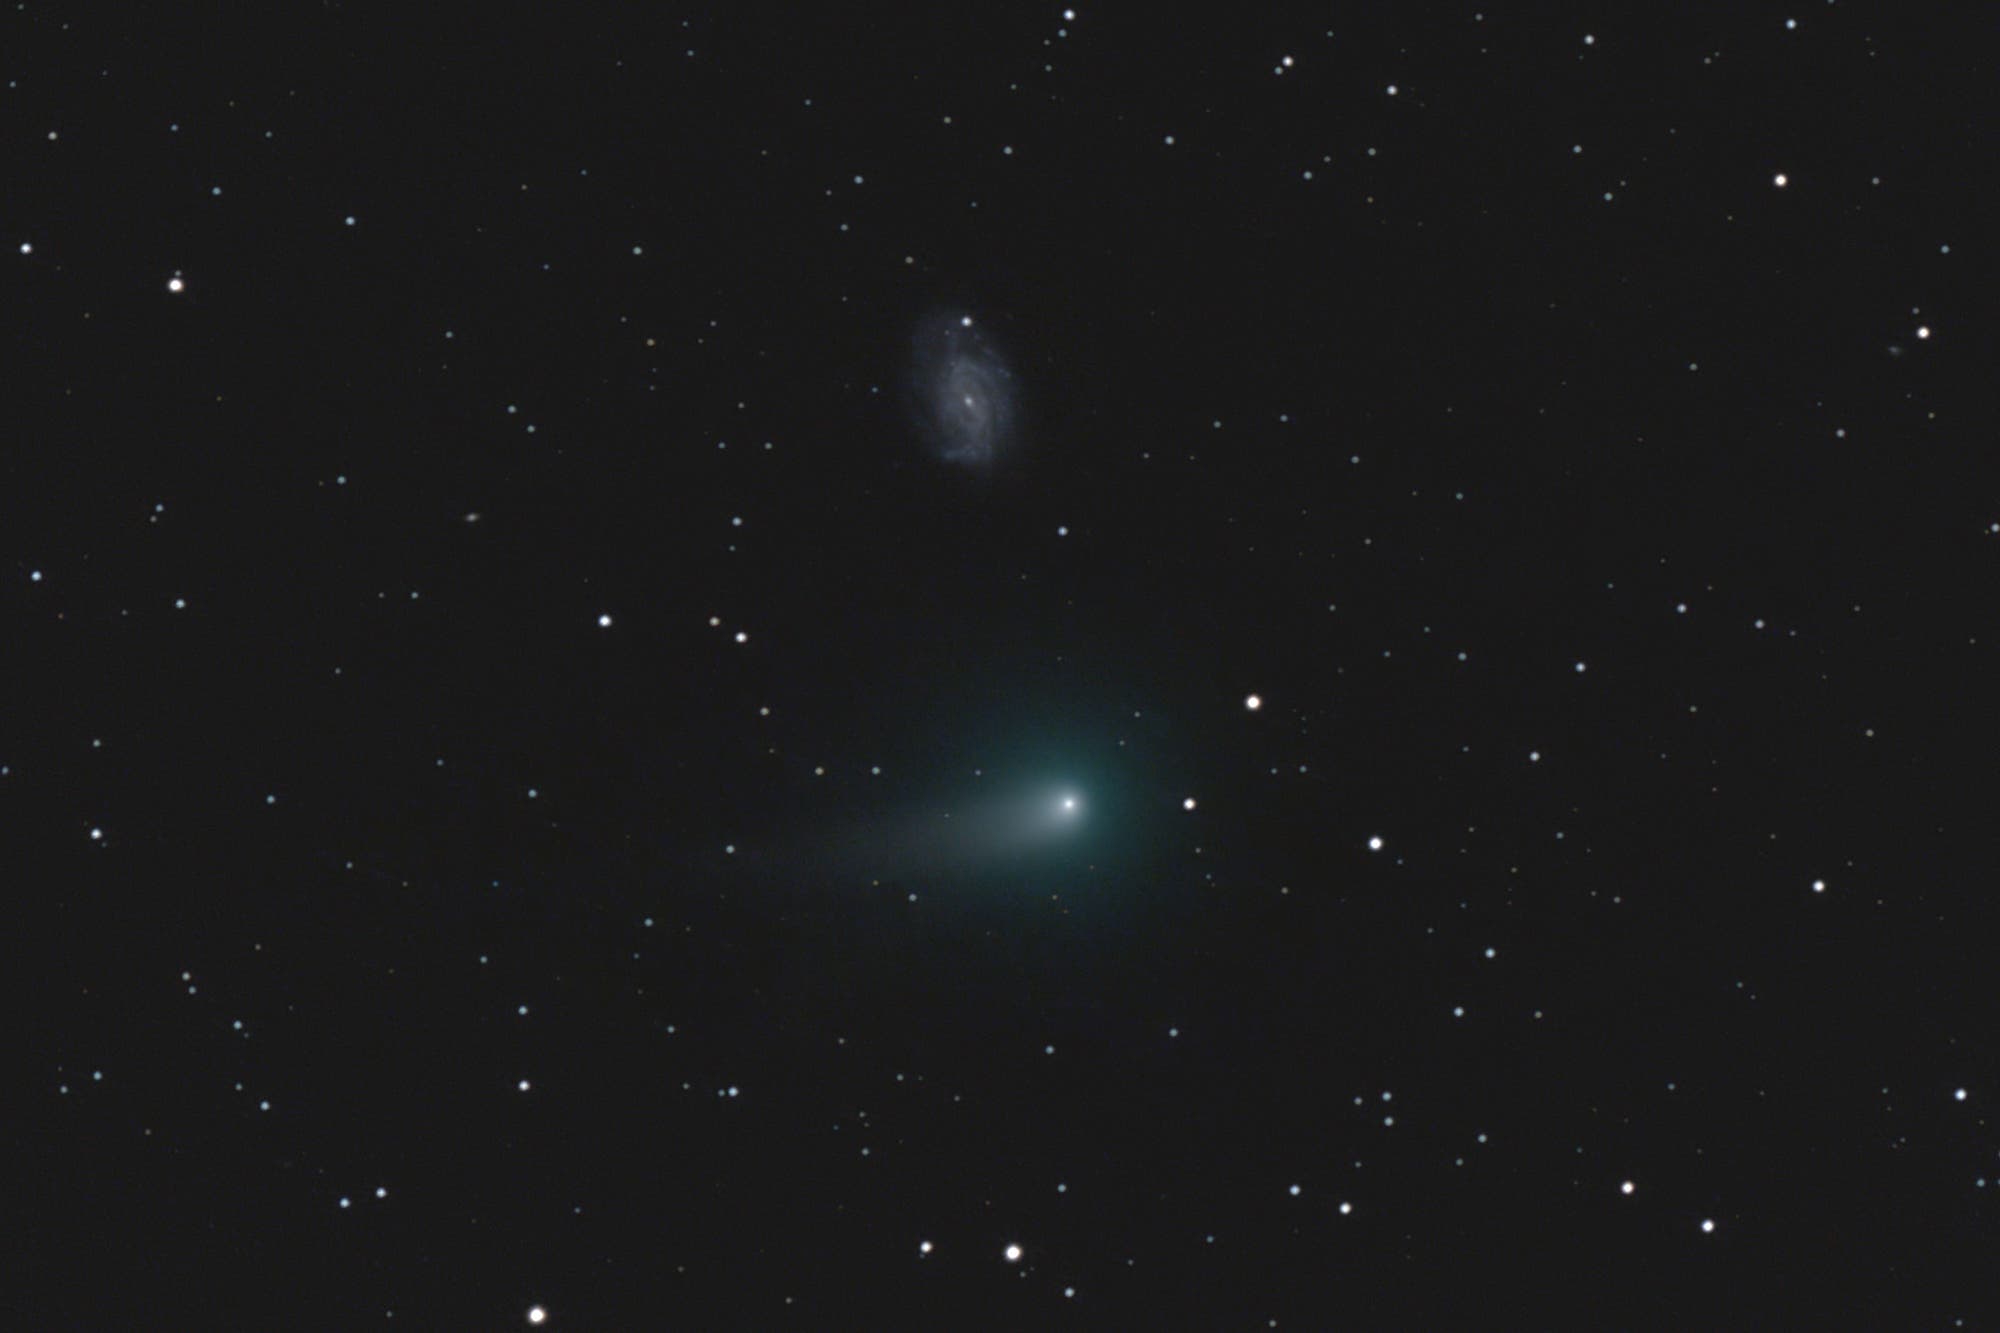 Komet C/2012 K1 PANSTARRS bei Galaxie NGC 3726